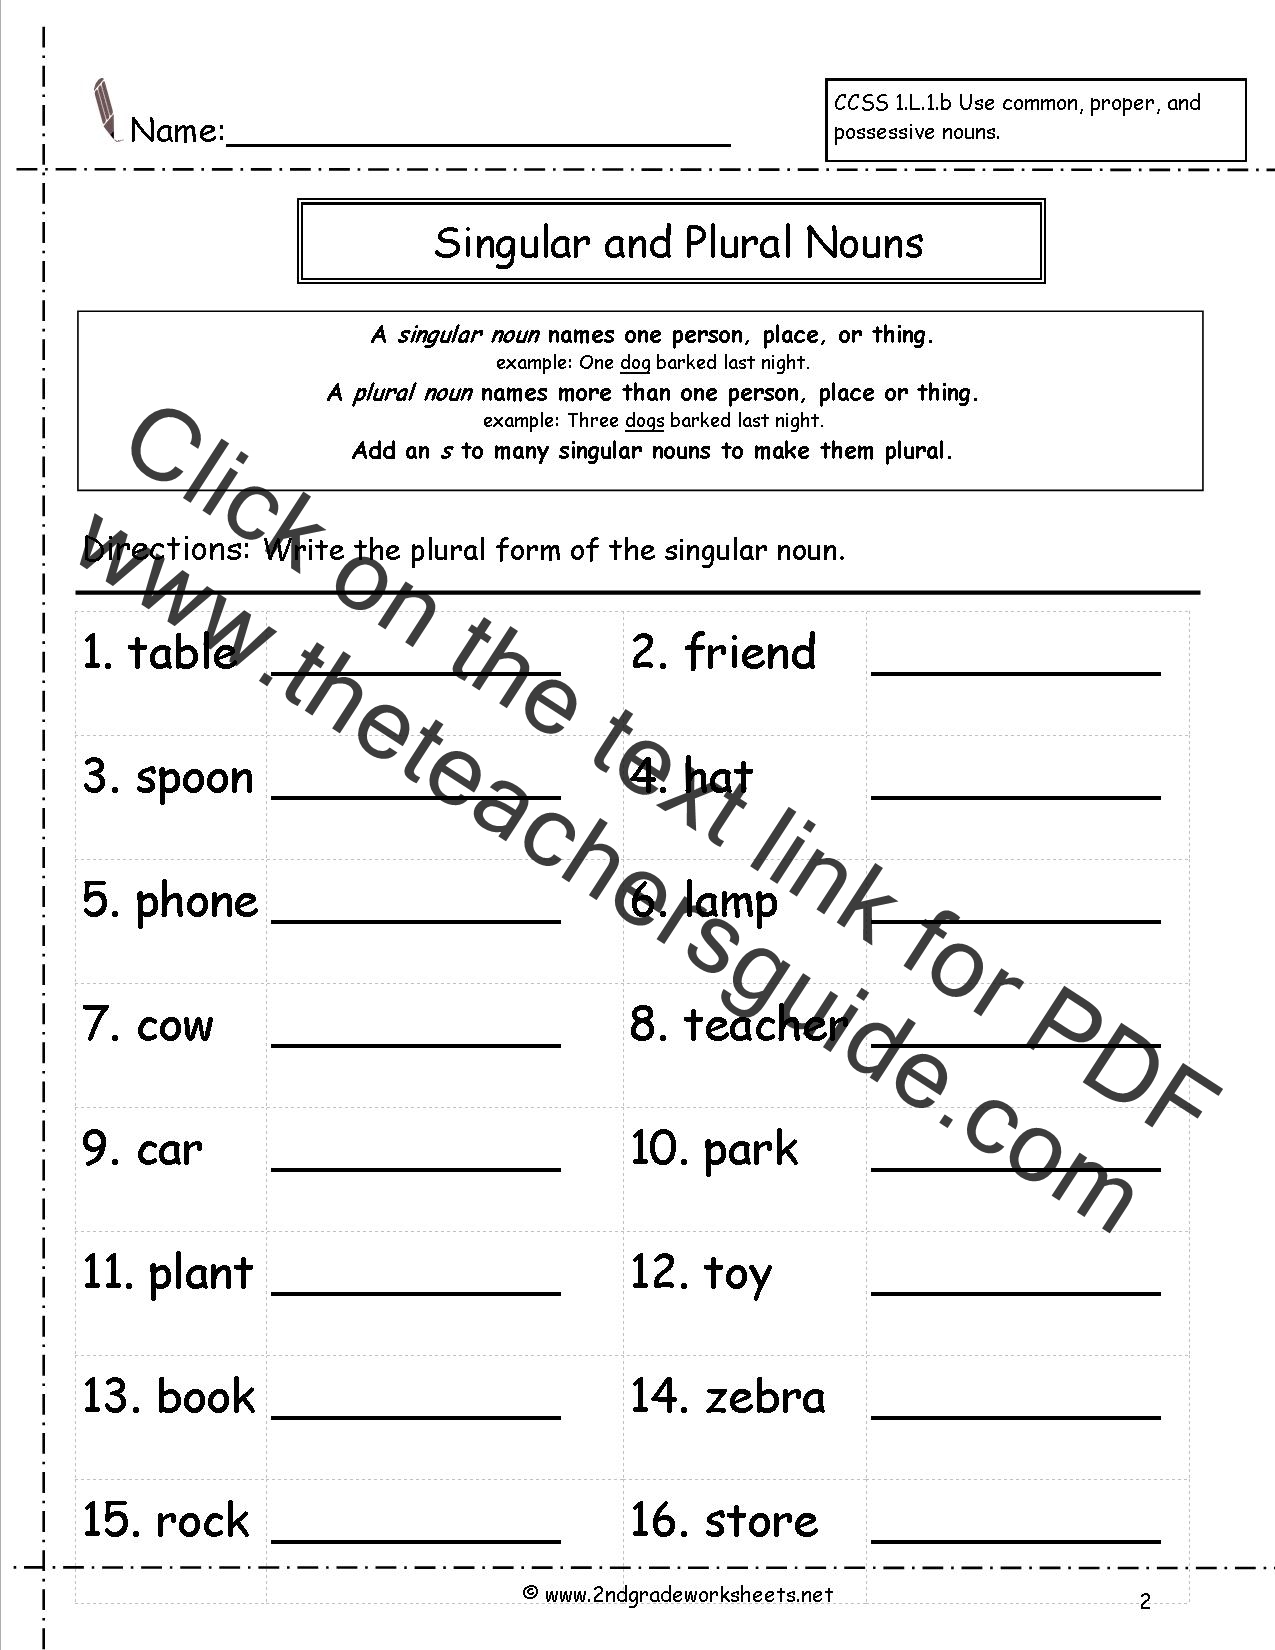 Singular And Plural Nouns Worksheets